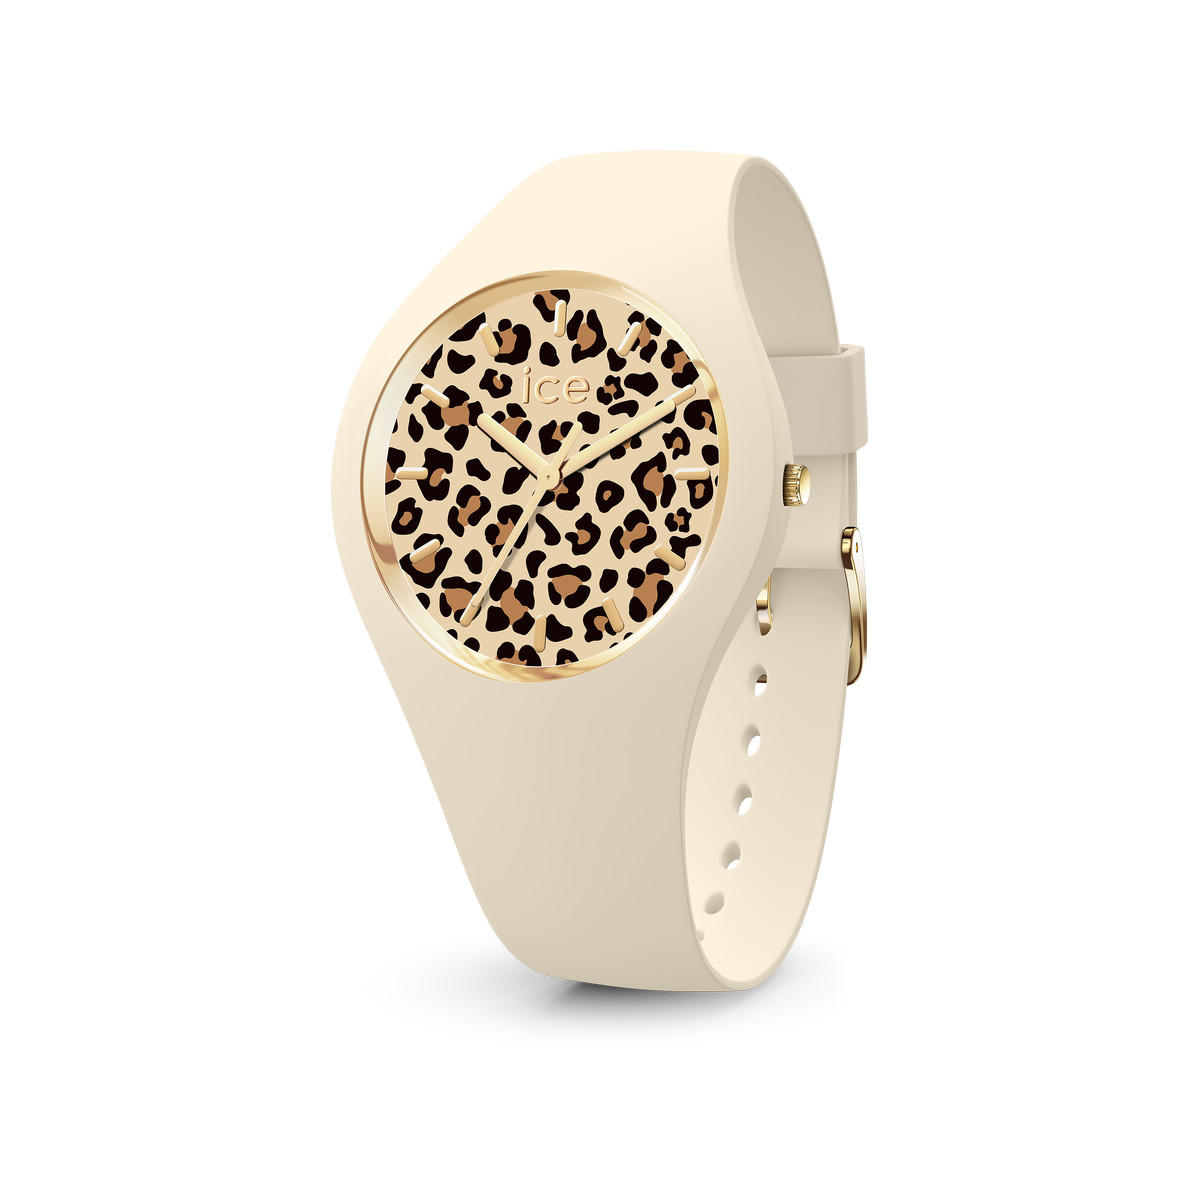 Montre ICE WATCH ice leopard femme bracelet silicone beige